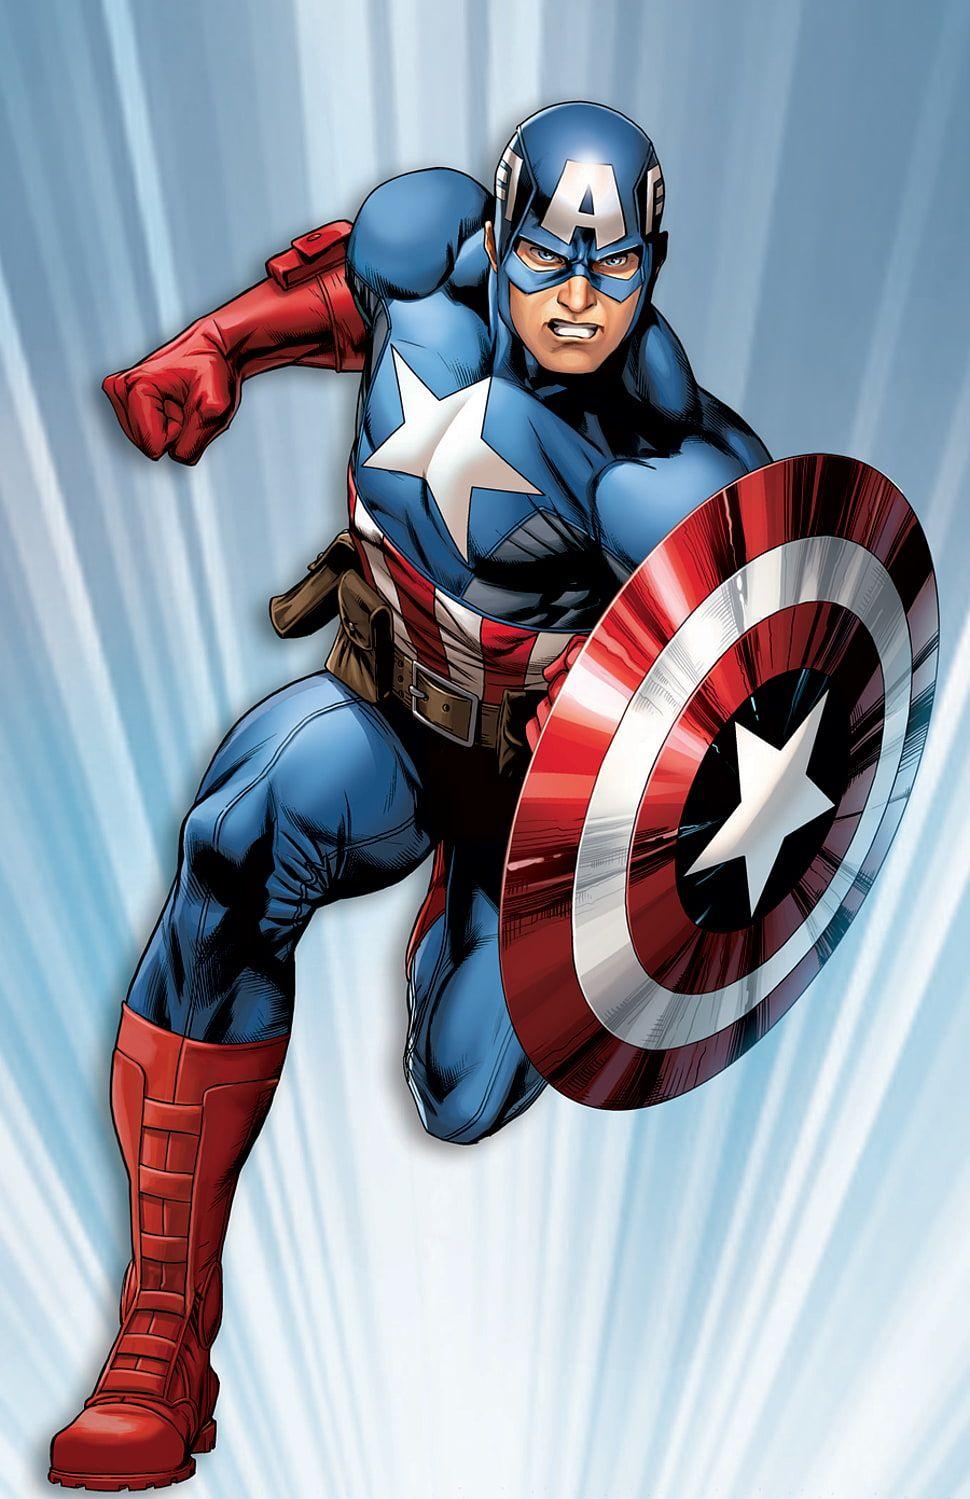 Captain America Cartoon Wallpapers - Top Free Captain America ...